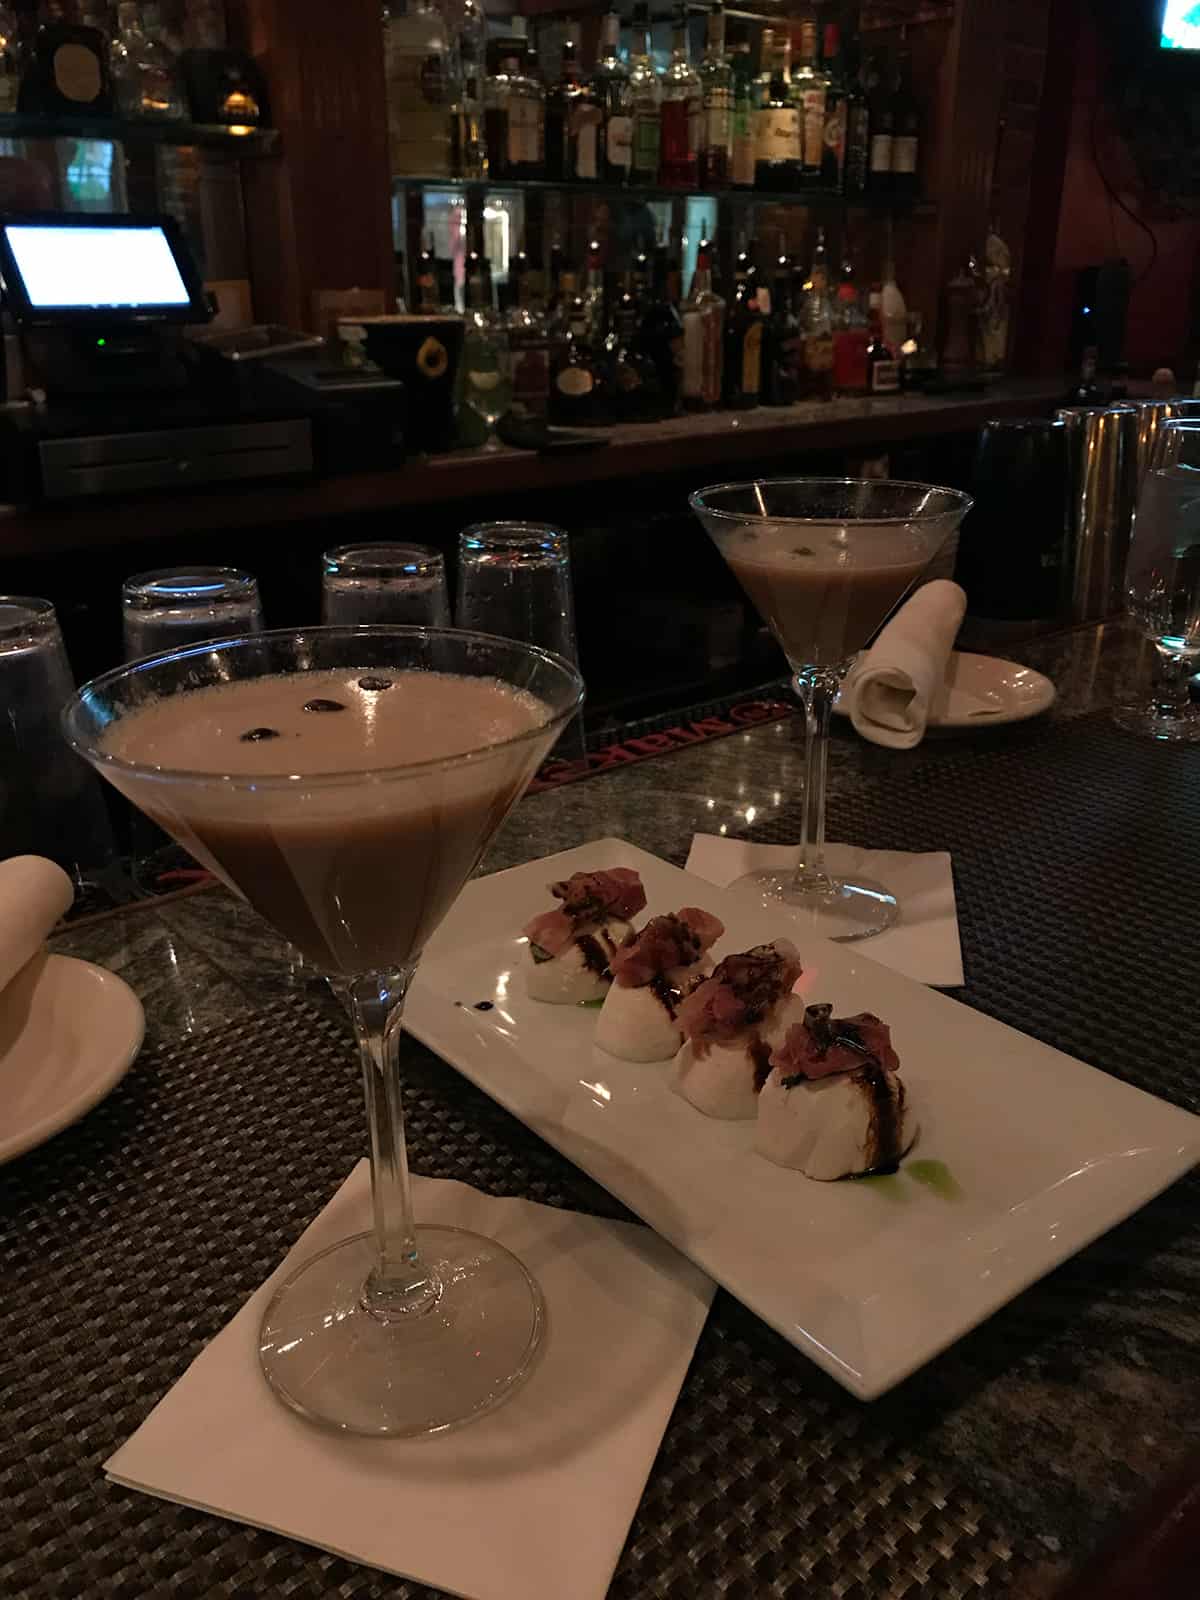 Espresso martinis - a popular cocktail in Boston's North End